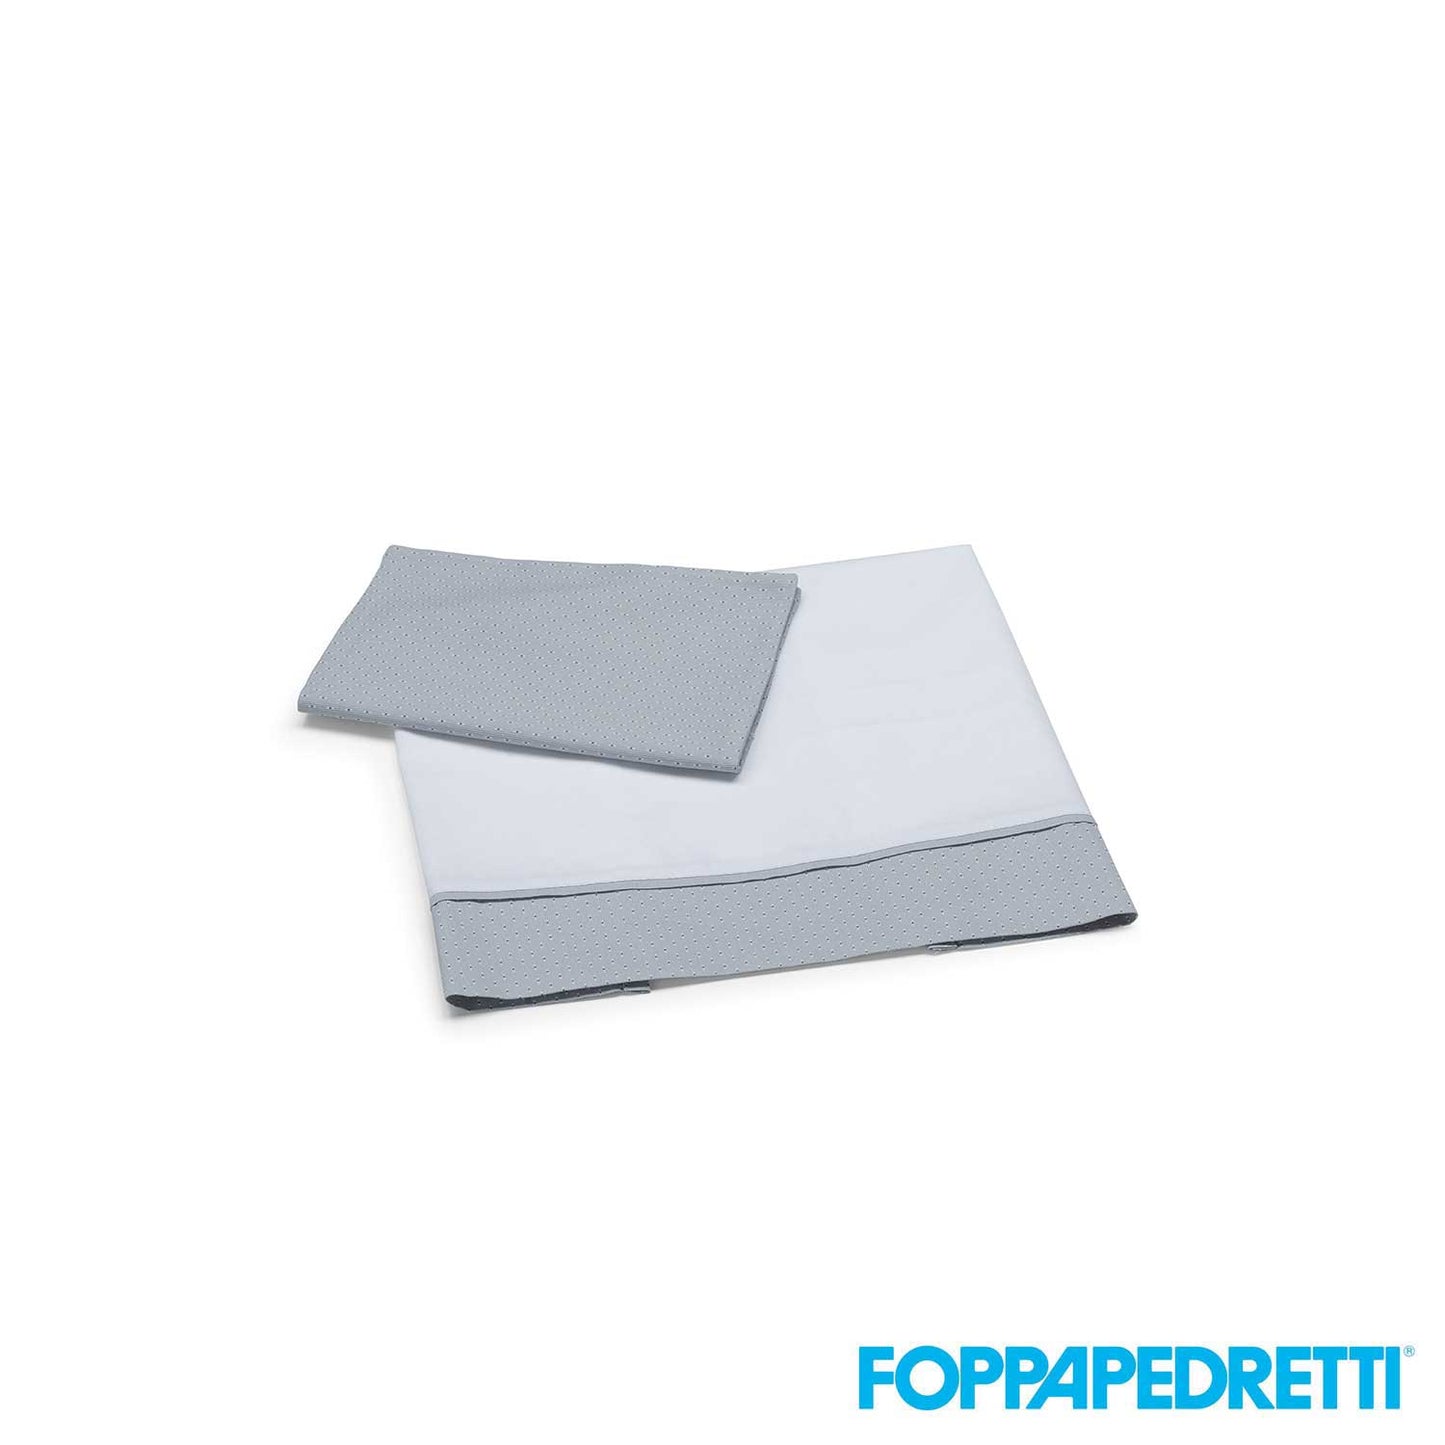 Foppapedretti - Sheet set for mybebè and inanna cradle